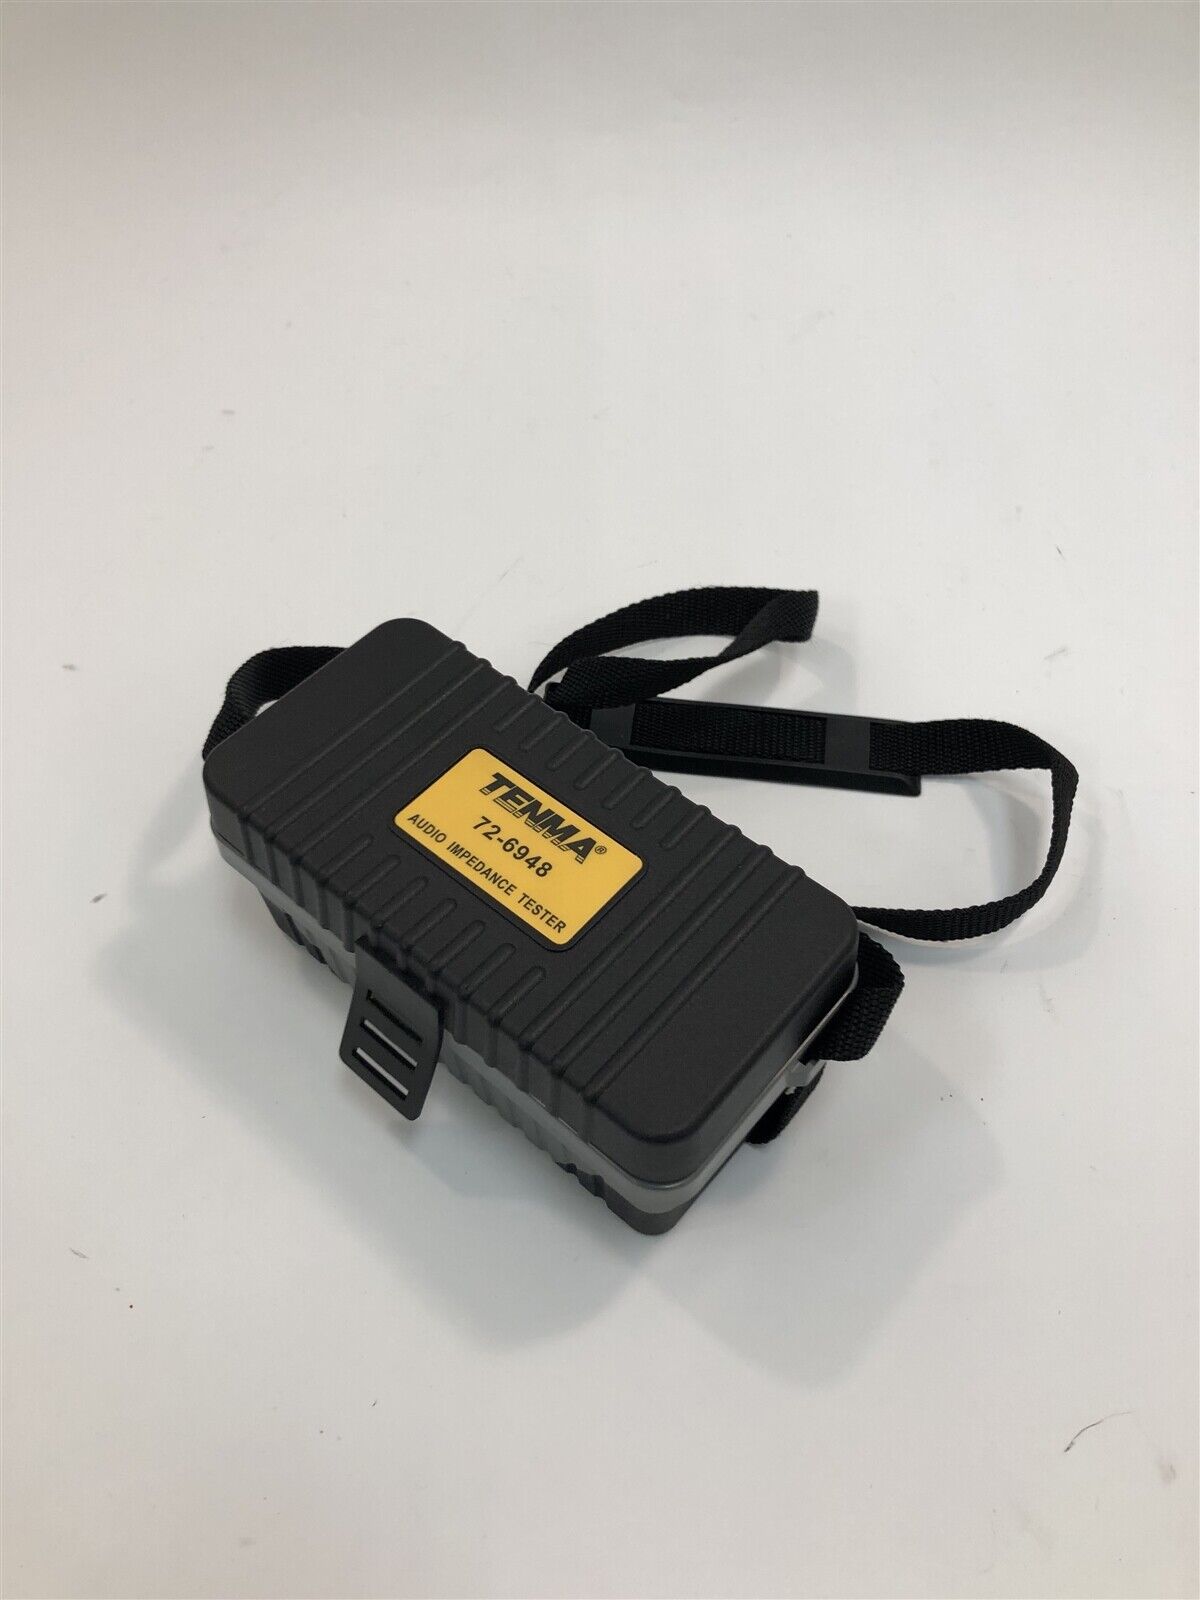 Tenma Audio Impedance Tester 72-6948